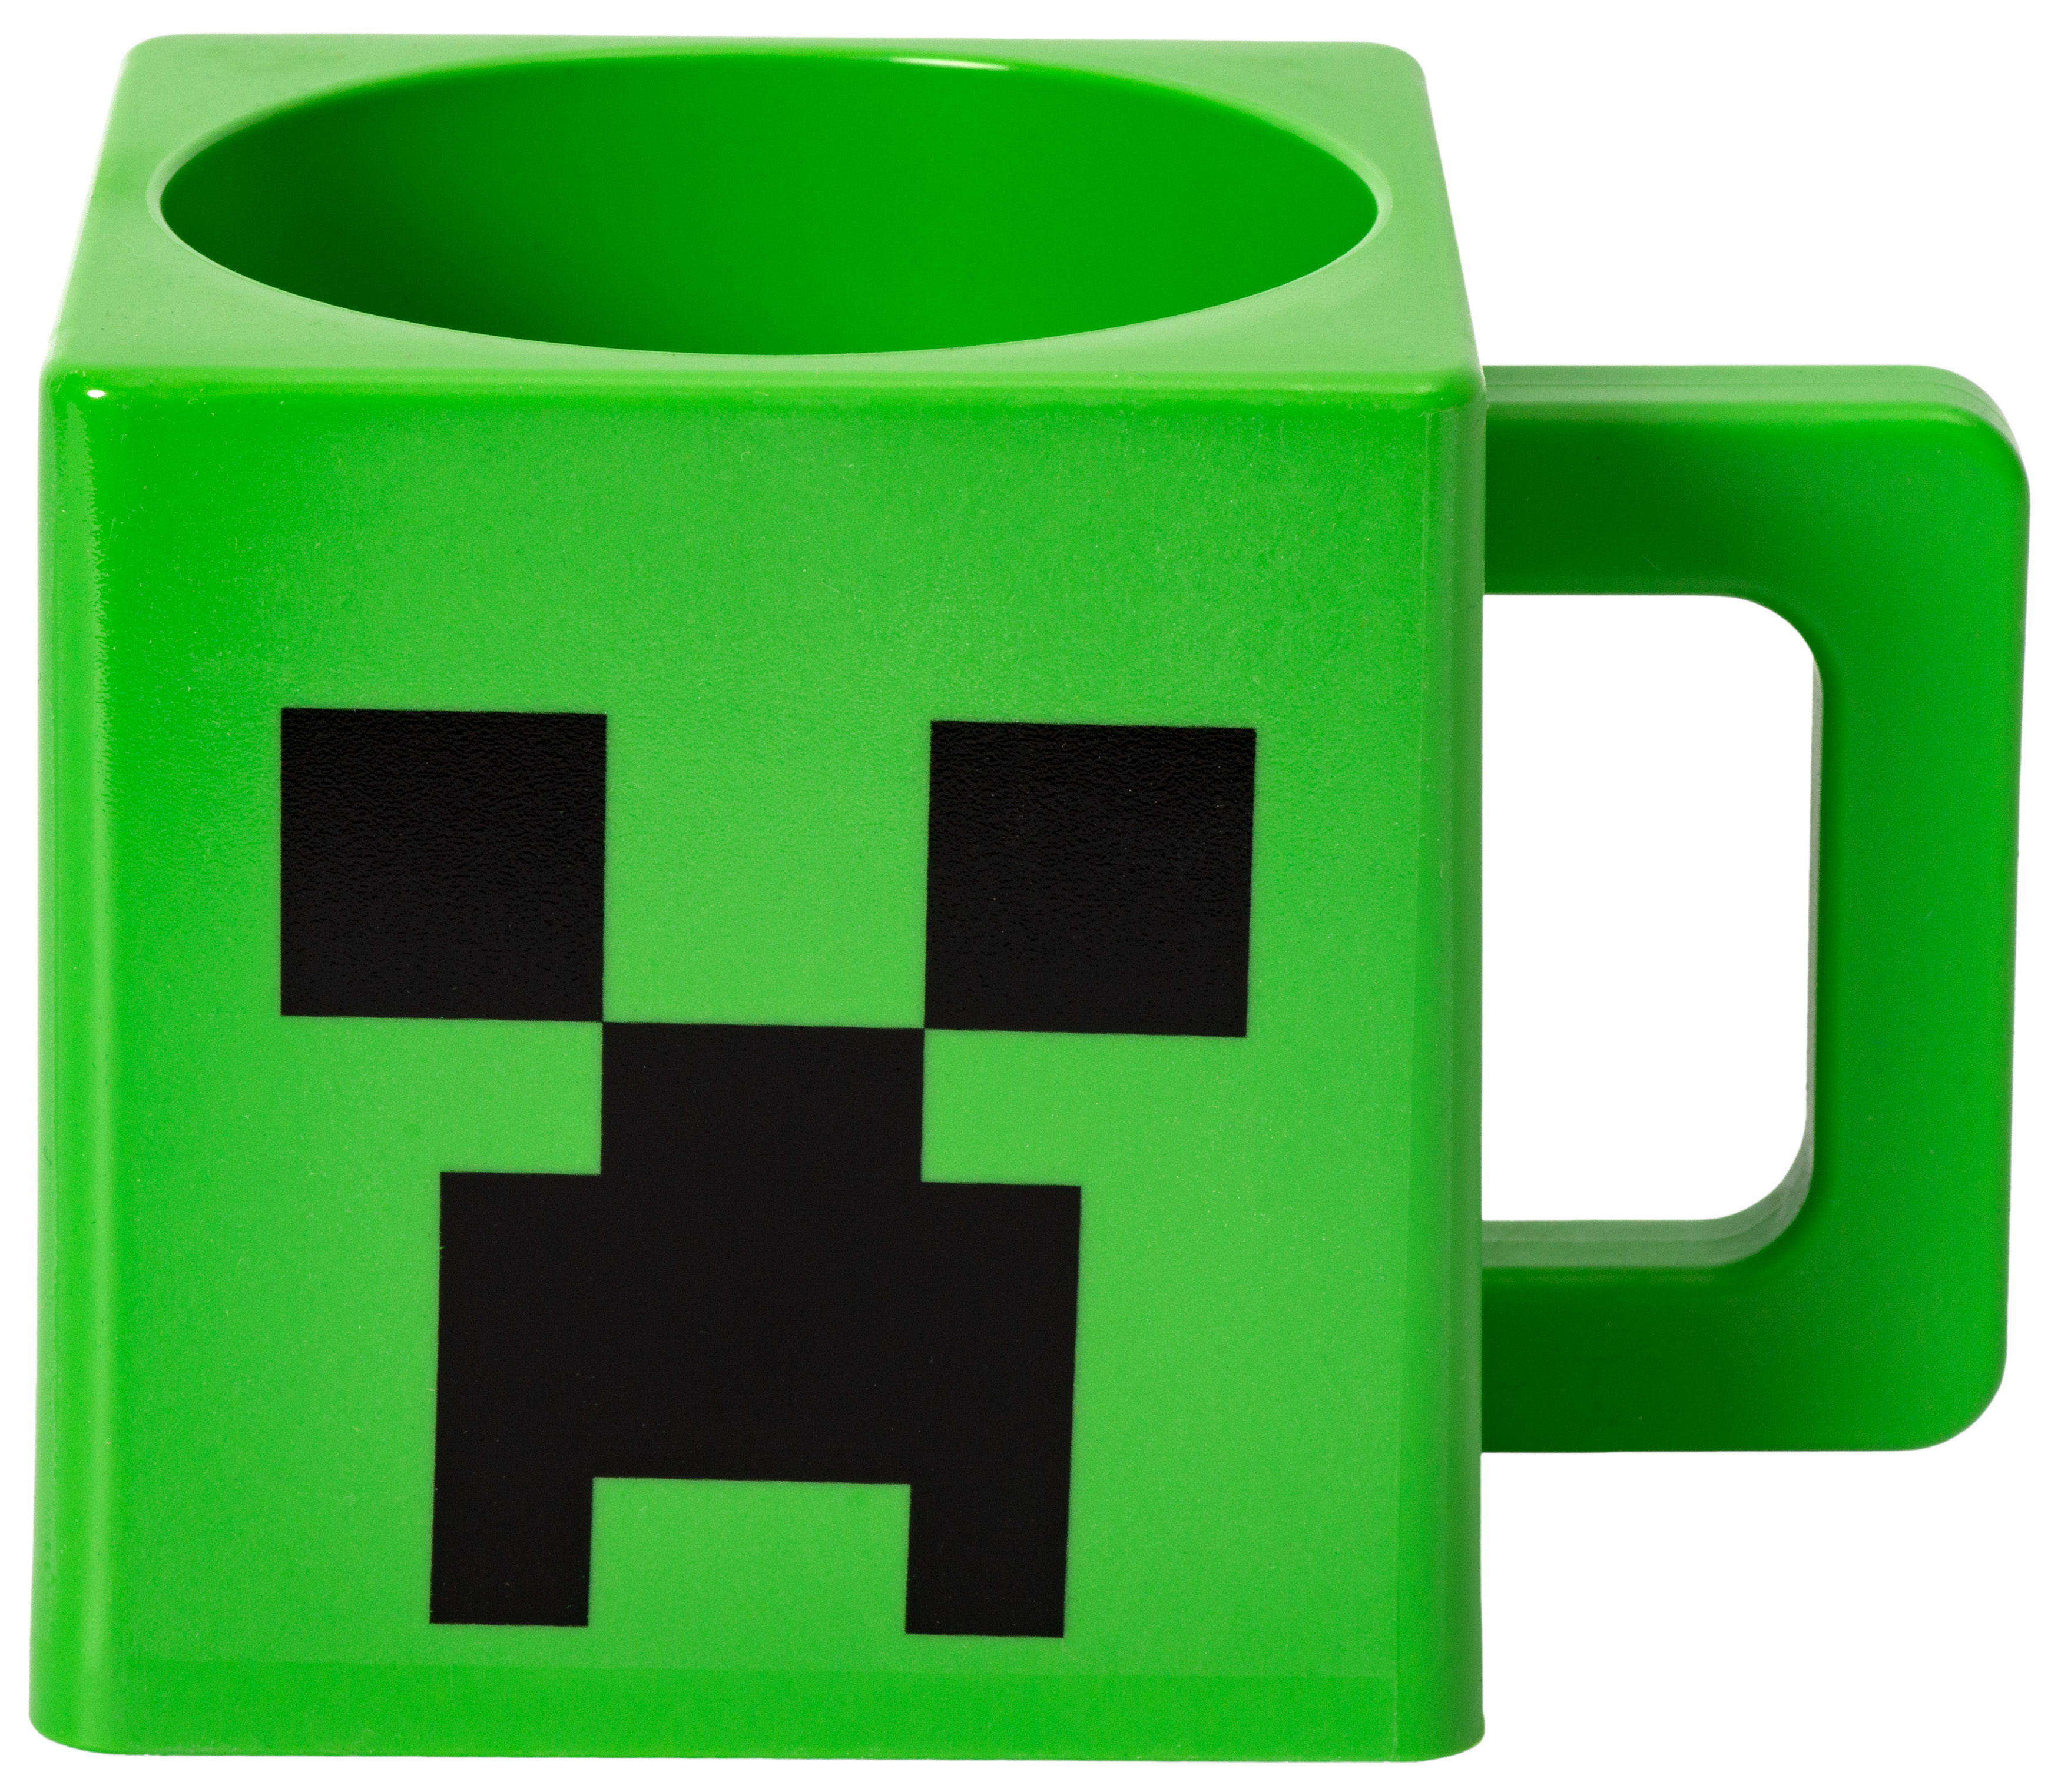 Cube Tasse Minecraft - Creeper 